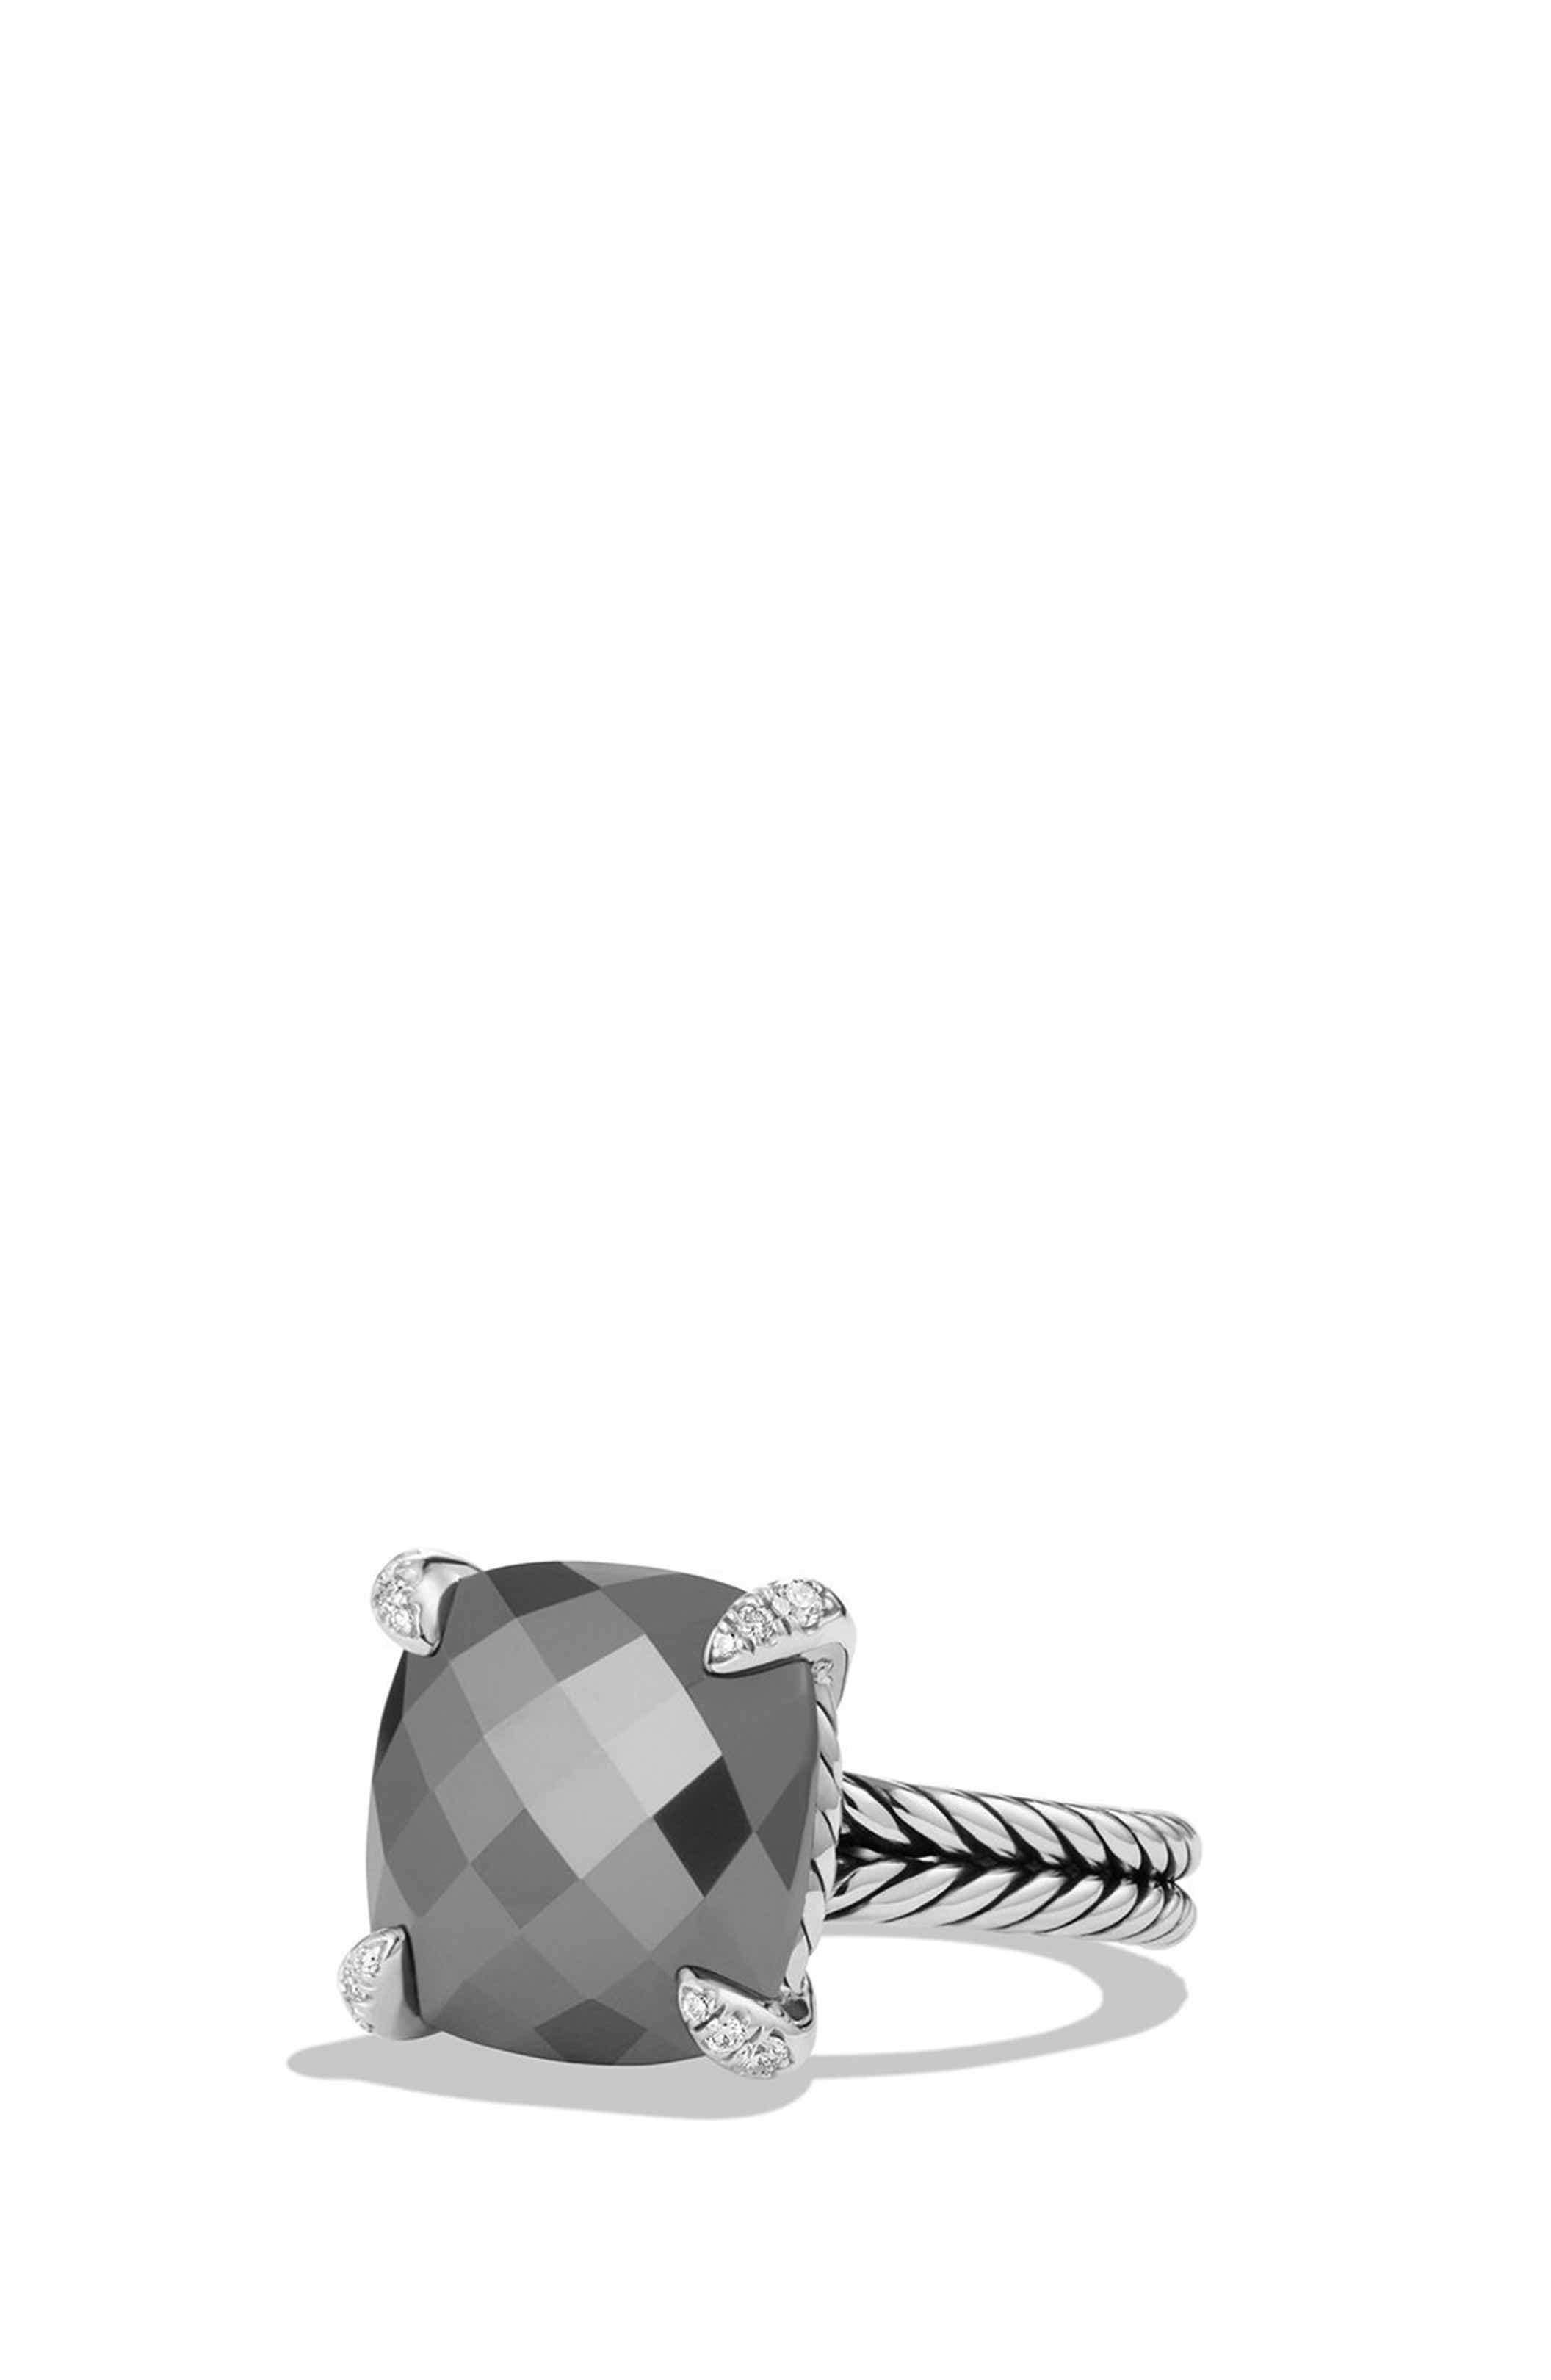 David Yurman 'Châtelaine' Ring with Semiprecious Stone and Diamonds